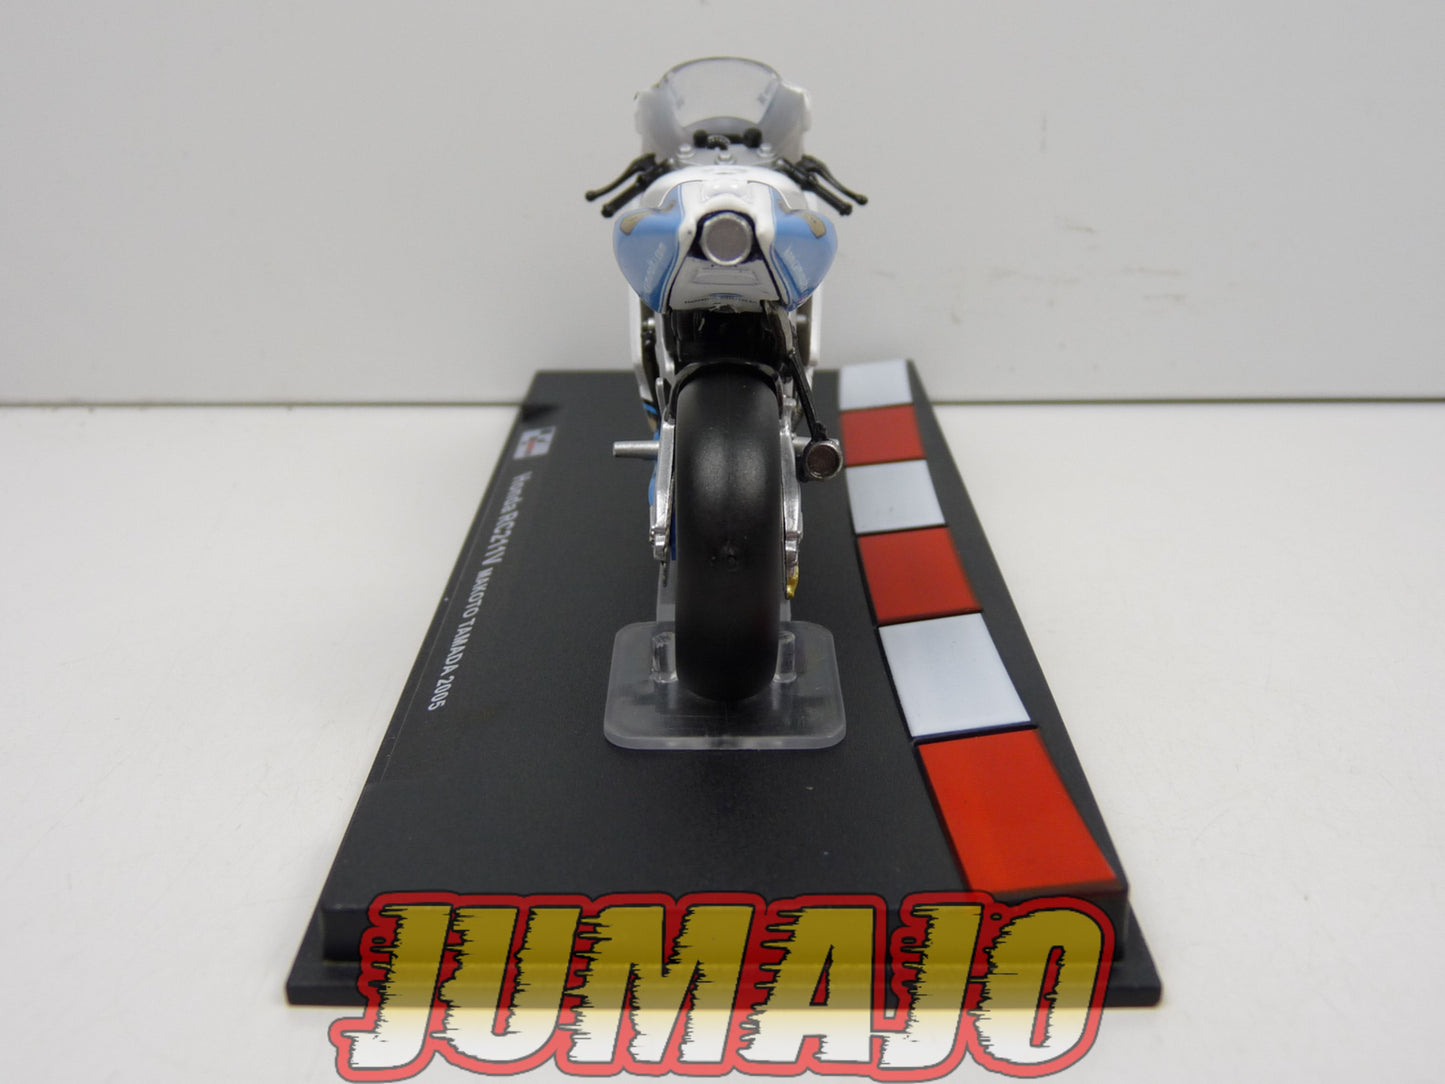 GP14 Moto GP 1/24 IXO : Honda RC211V Makoto Tamada 2005 #6